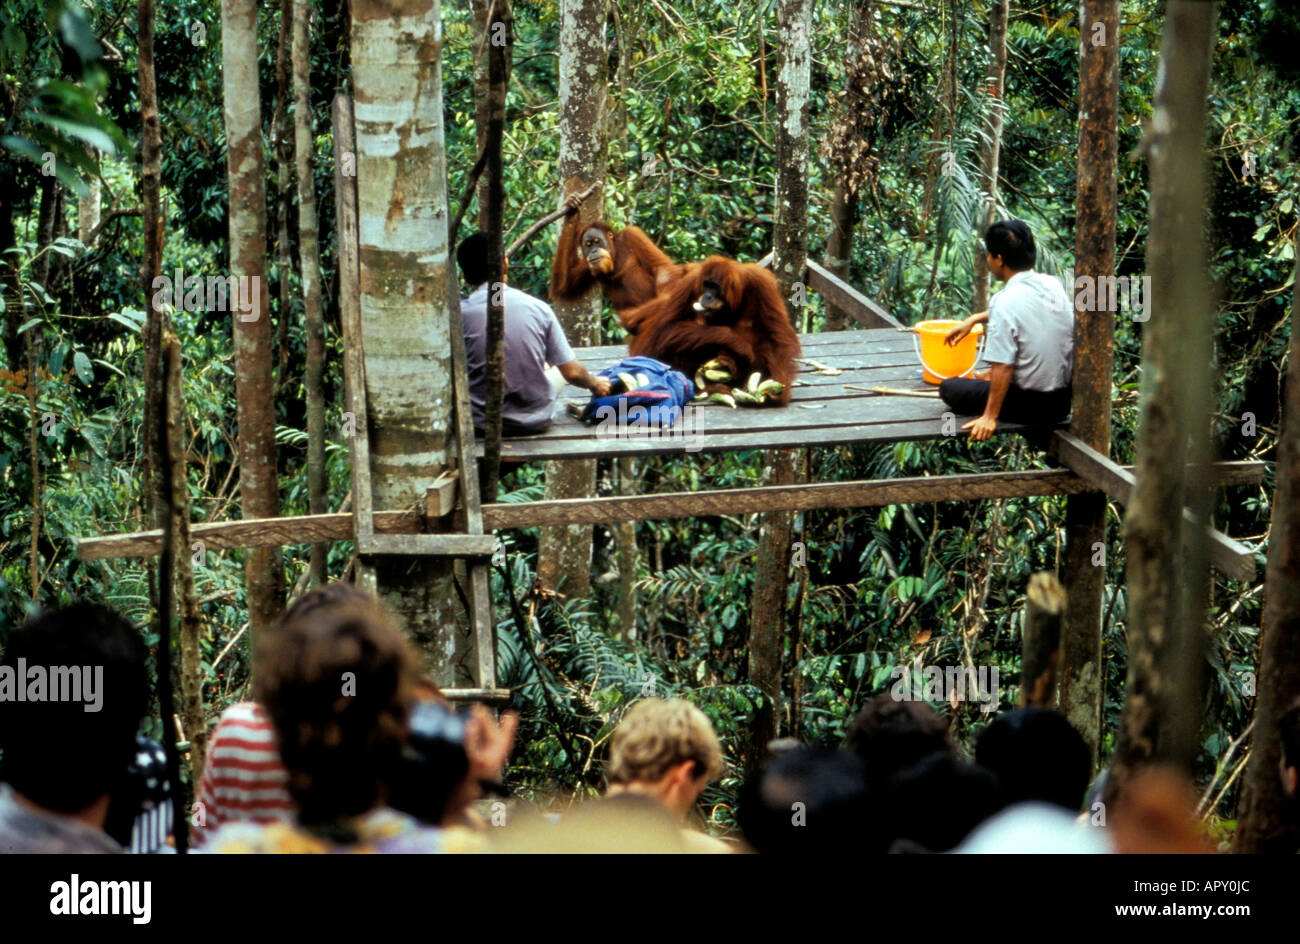 Feeding Orang-Utans at Orangutan rehabilitation center, Gunung Leuser National Park, Sumatra, Indonesia, Asia Stock Photo